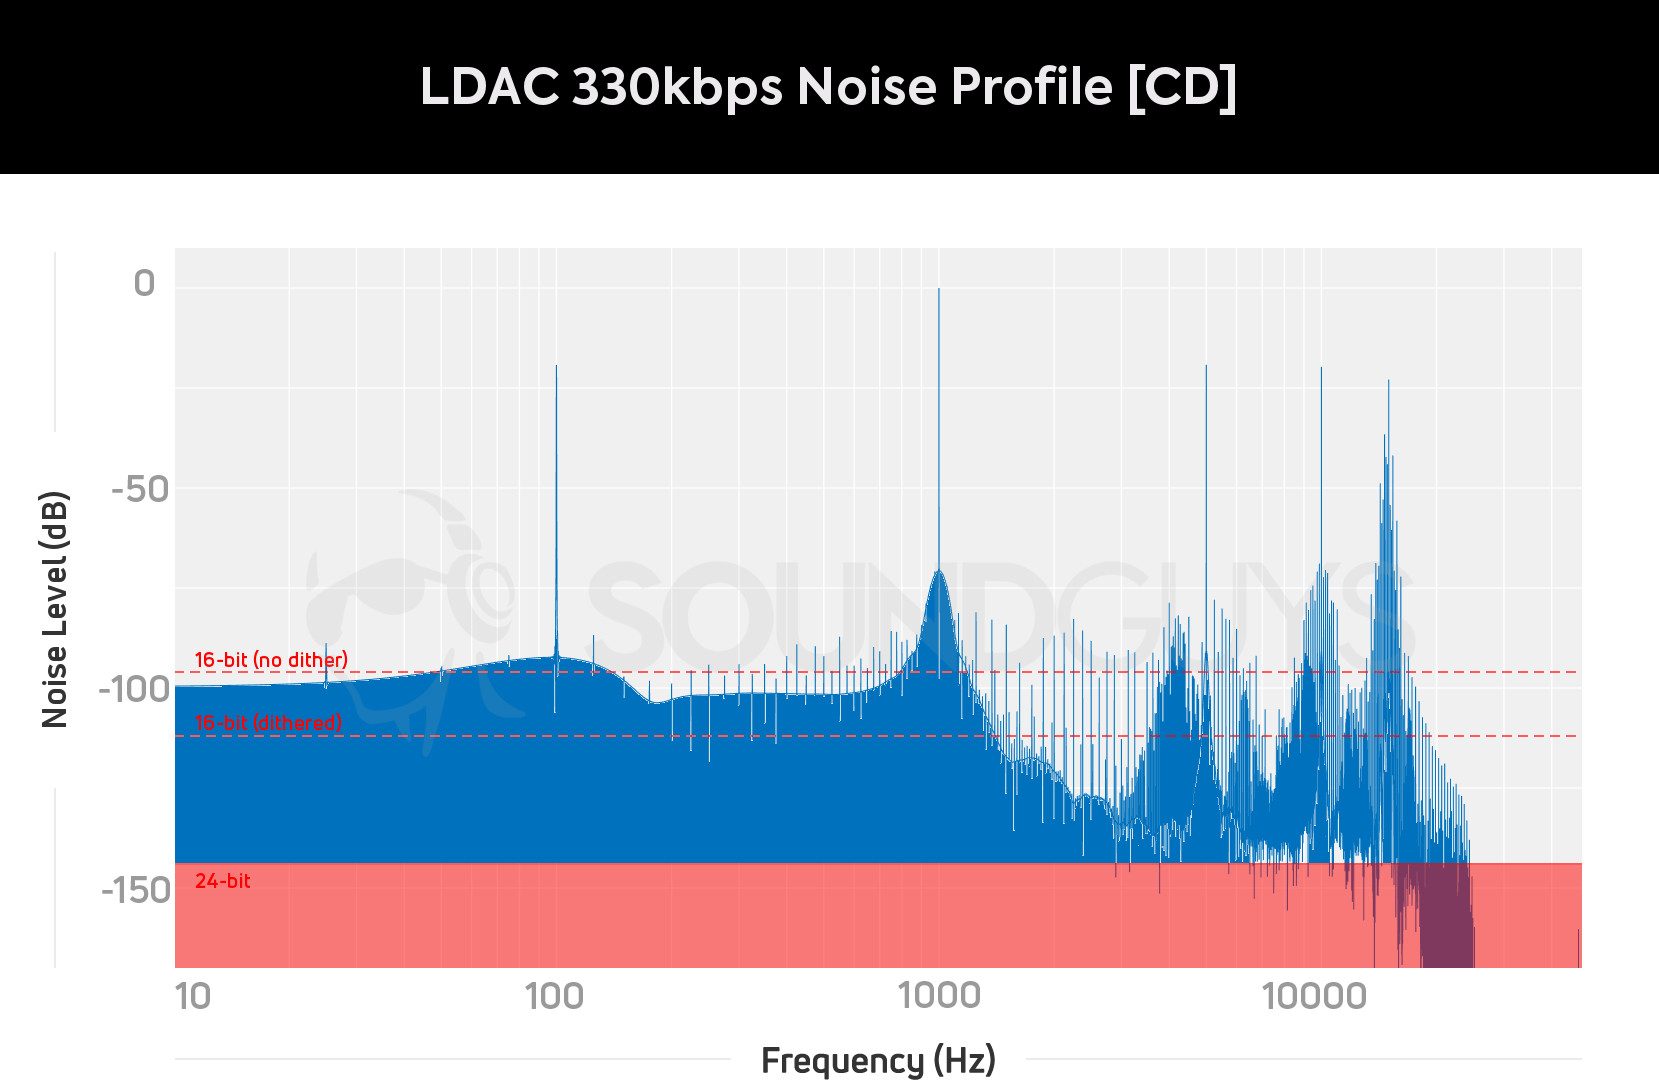 LDAC 330kbps noise floor playing back CD quality